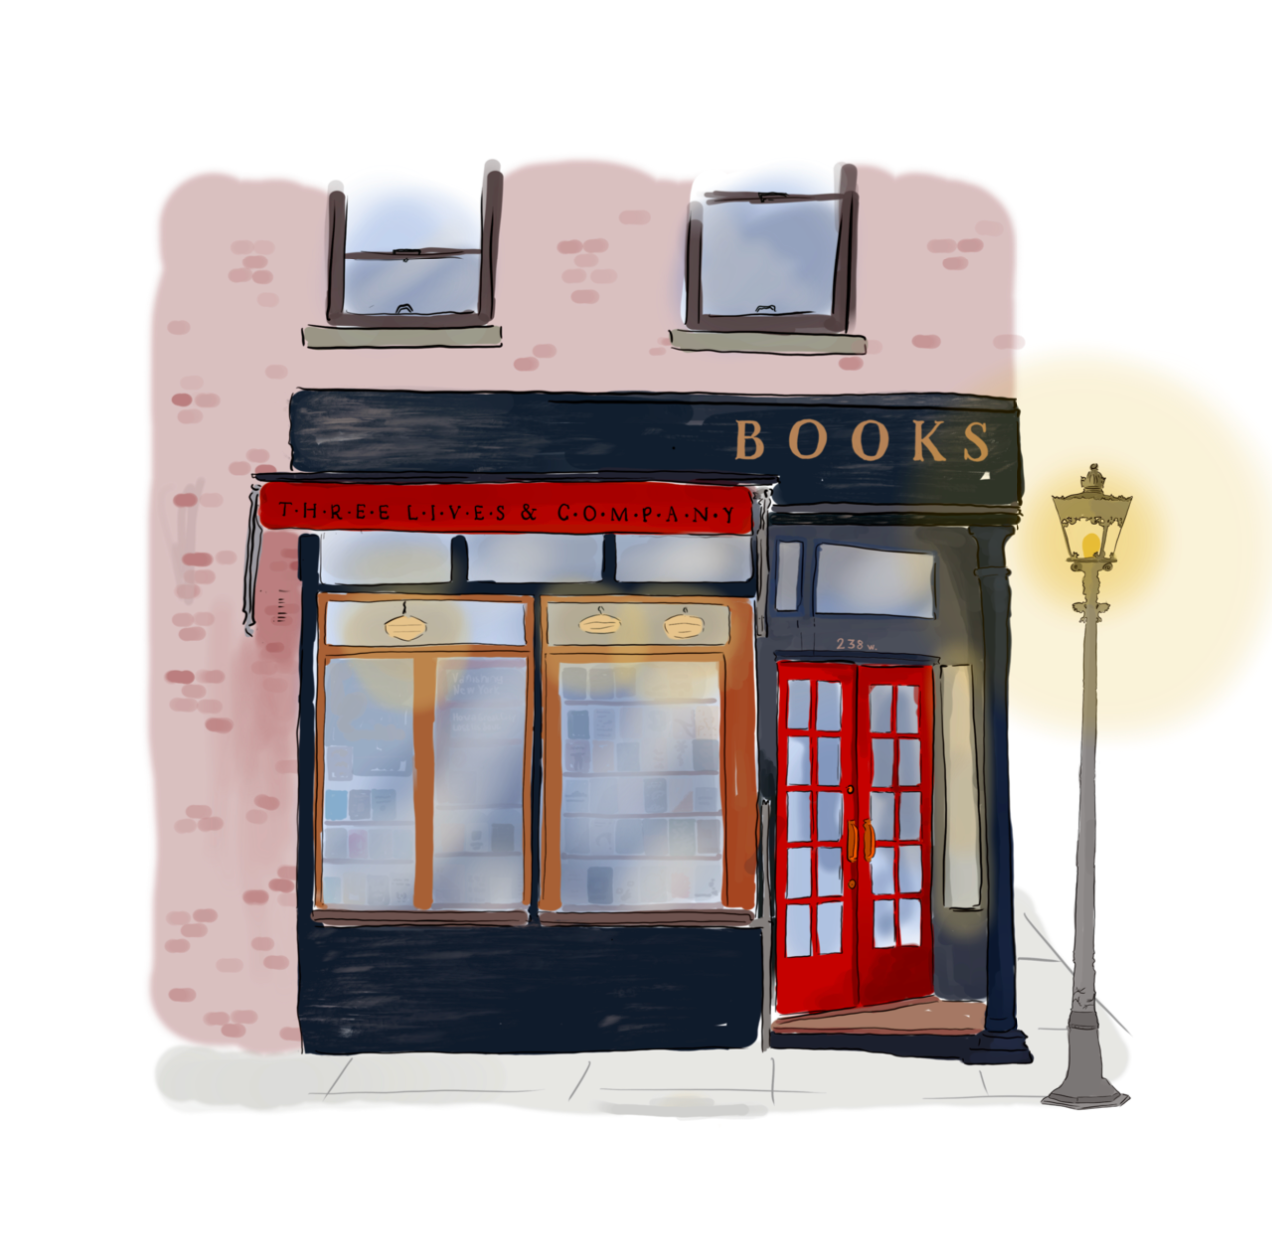 Three Lives & Co. Bookshop